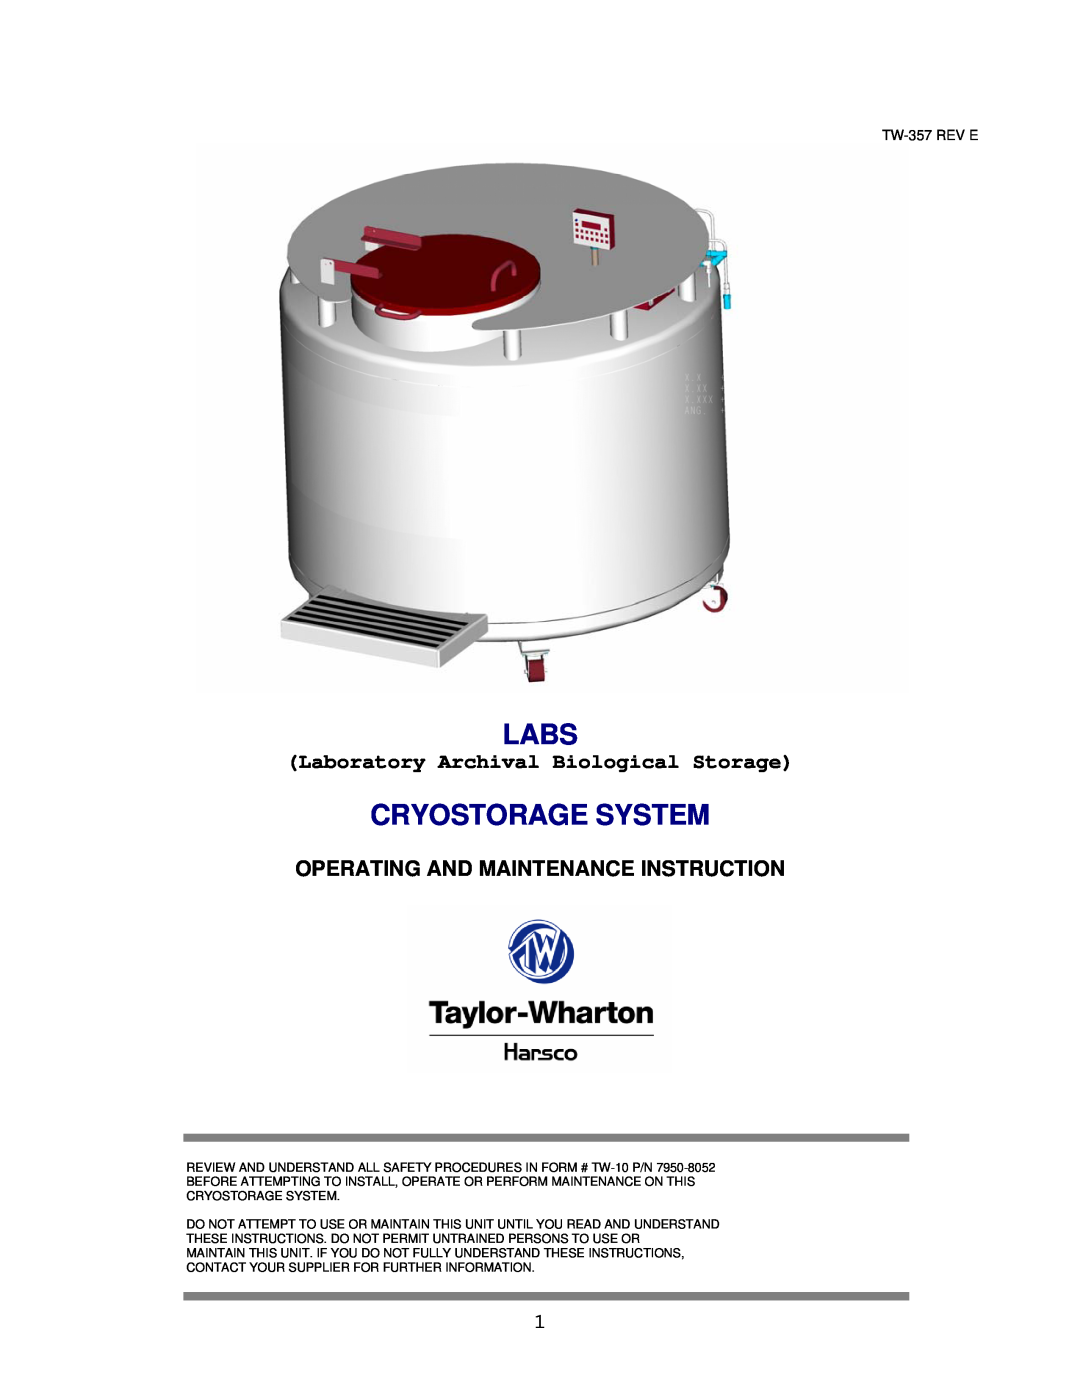 Taylor manual Laboratory Archival Biological Storage, Labs, Cryostorage System, TW-357 REV E 